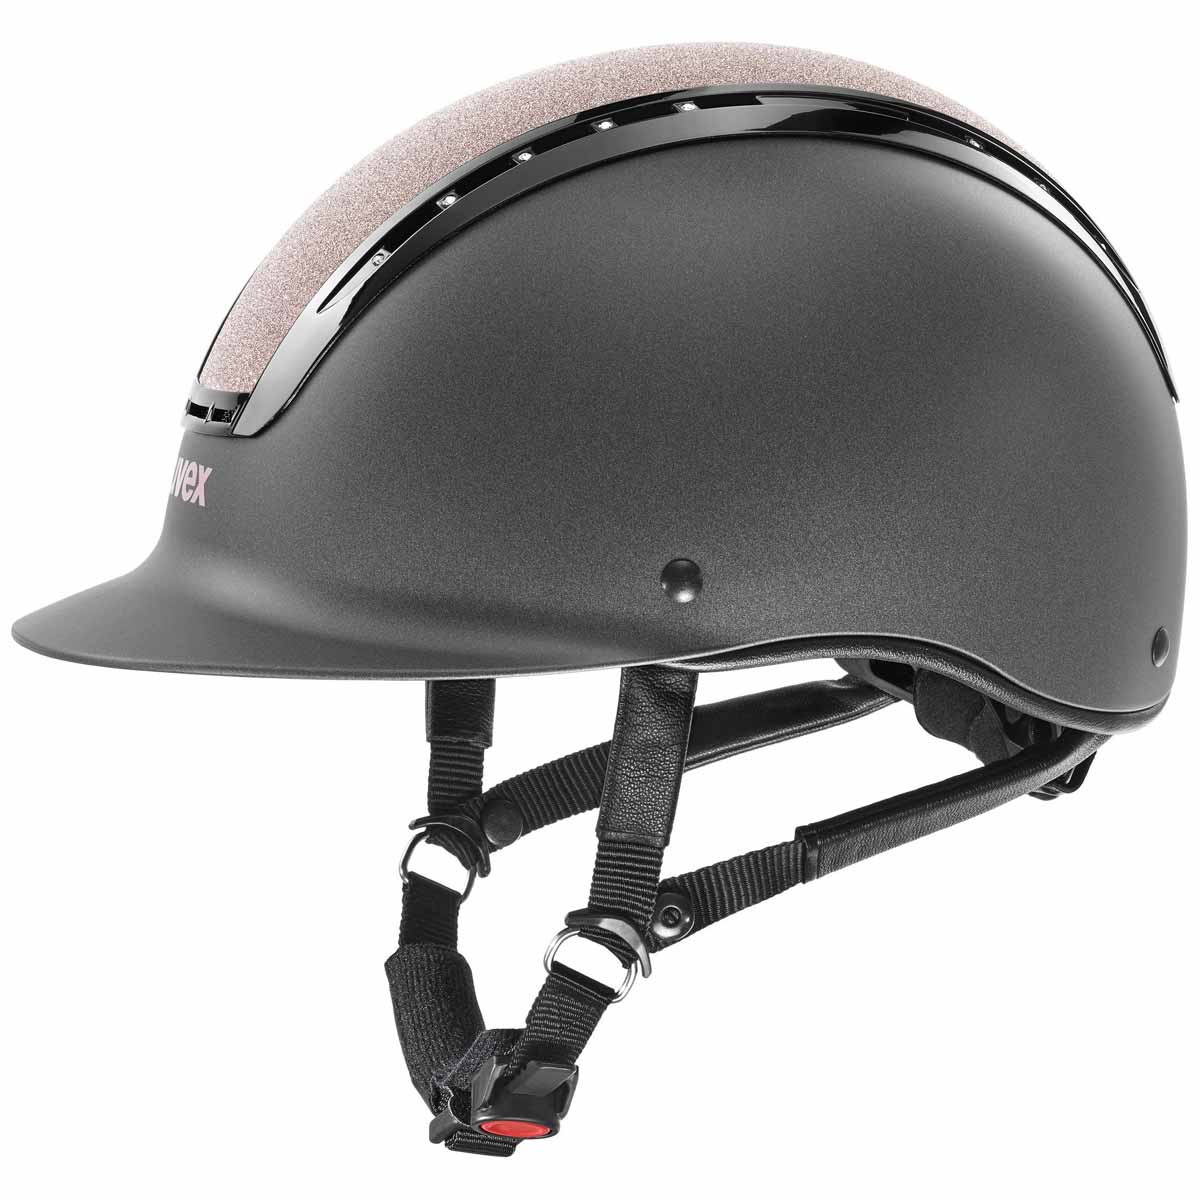 uvex suxxeed starshine riding helmet